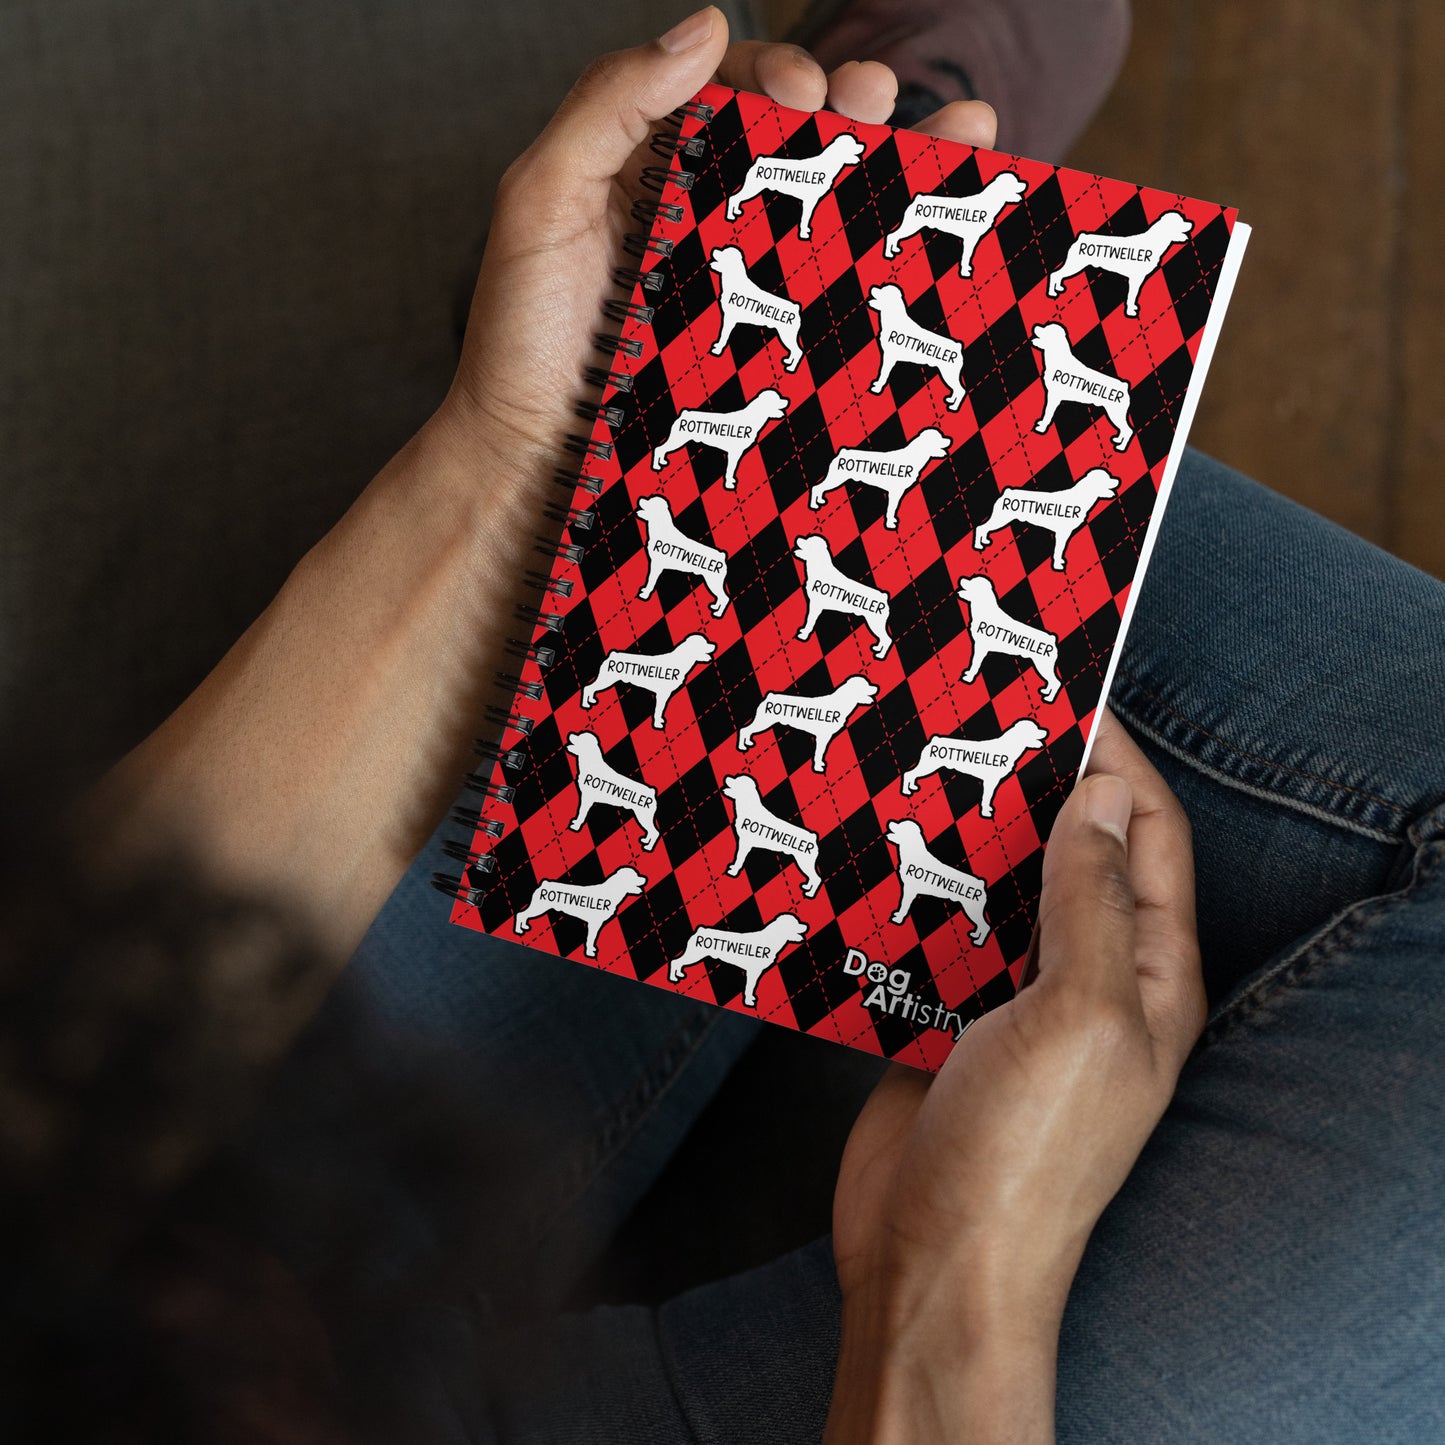 Rottweiler Argyle Red and Black Spiral Notebooks